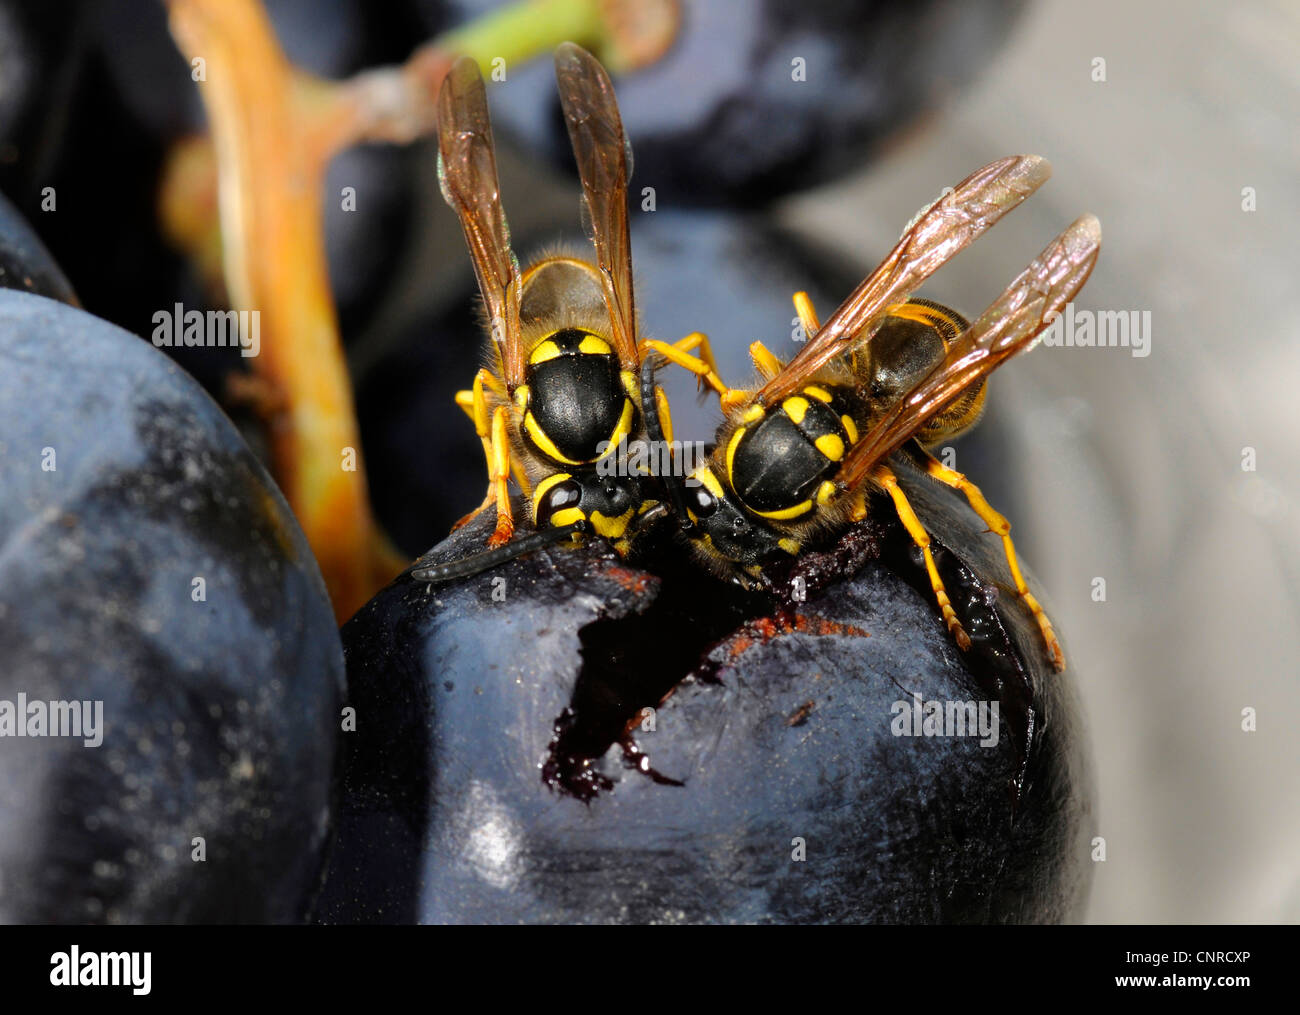 German wasp (Vespula germanica), feeding on red grapes Stock Photo